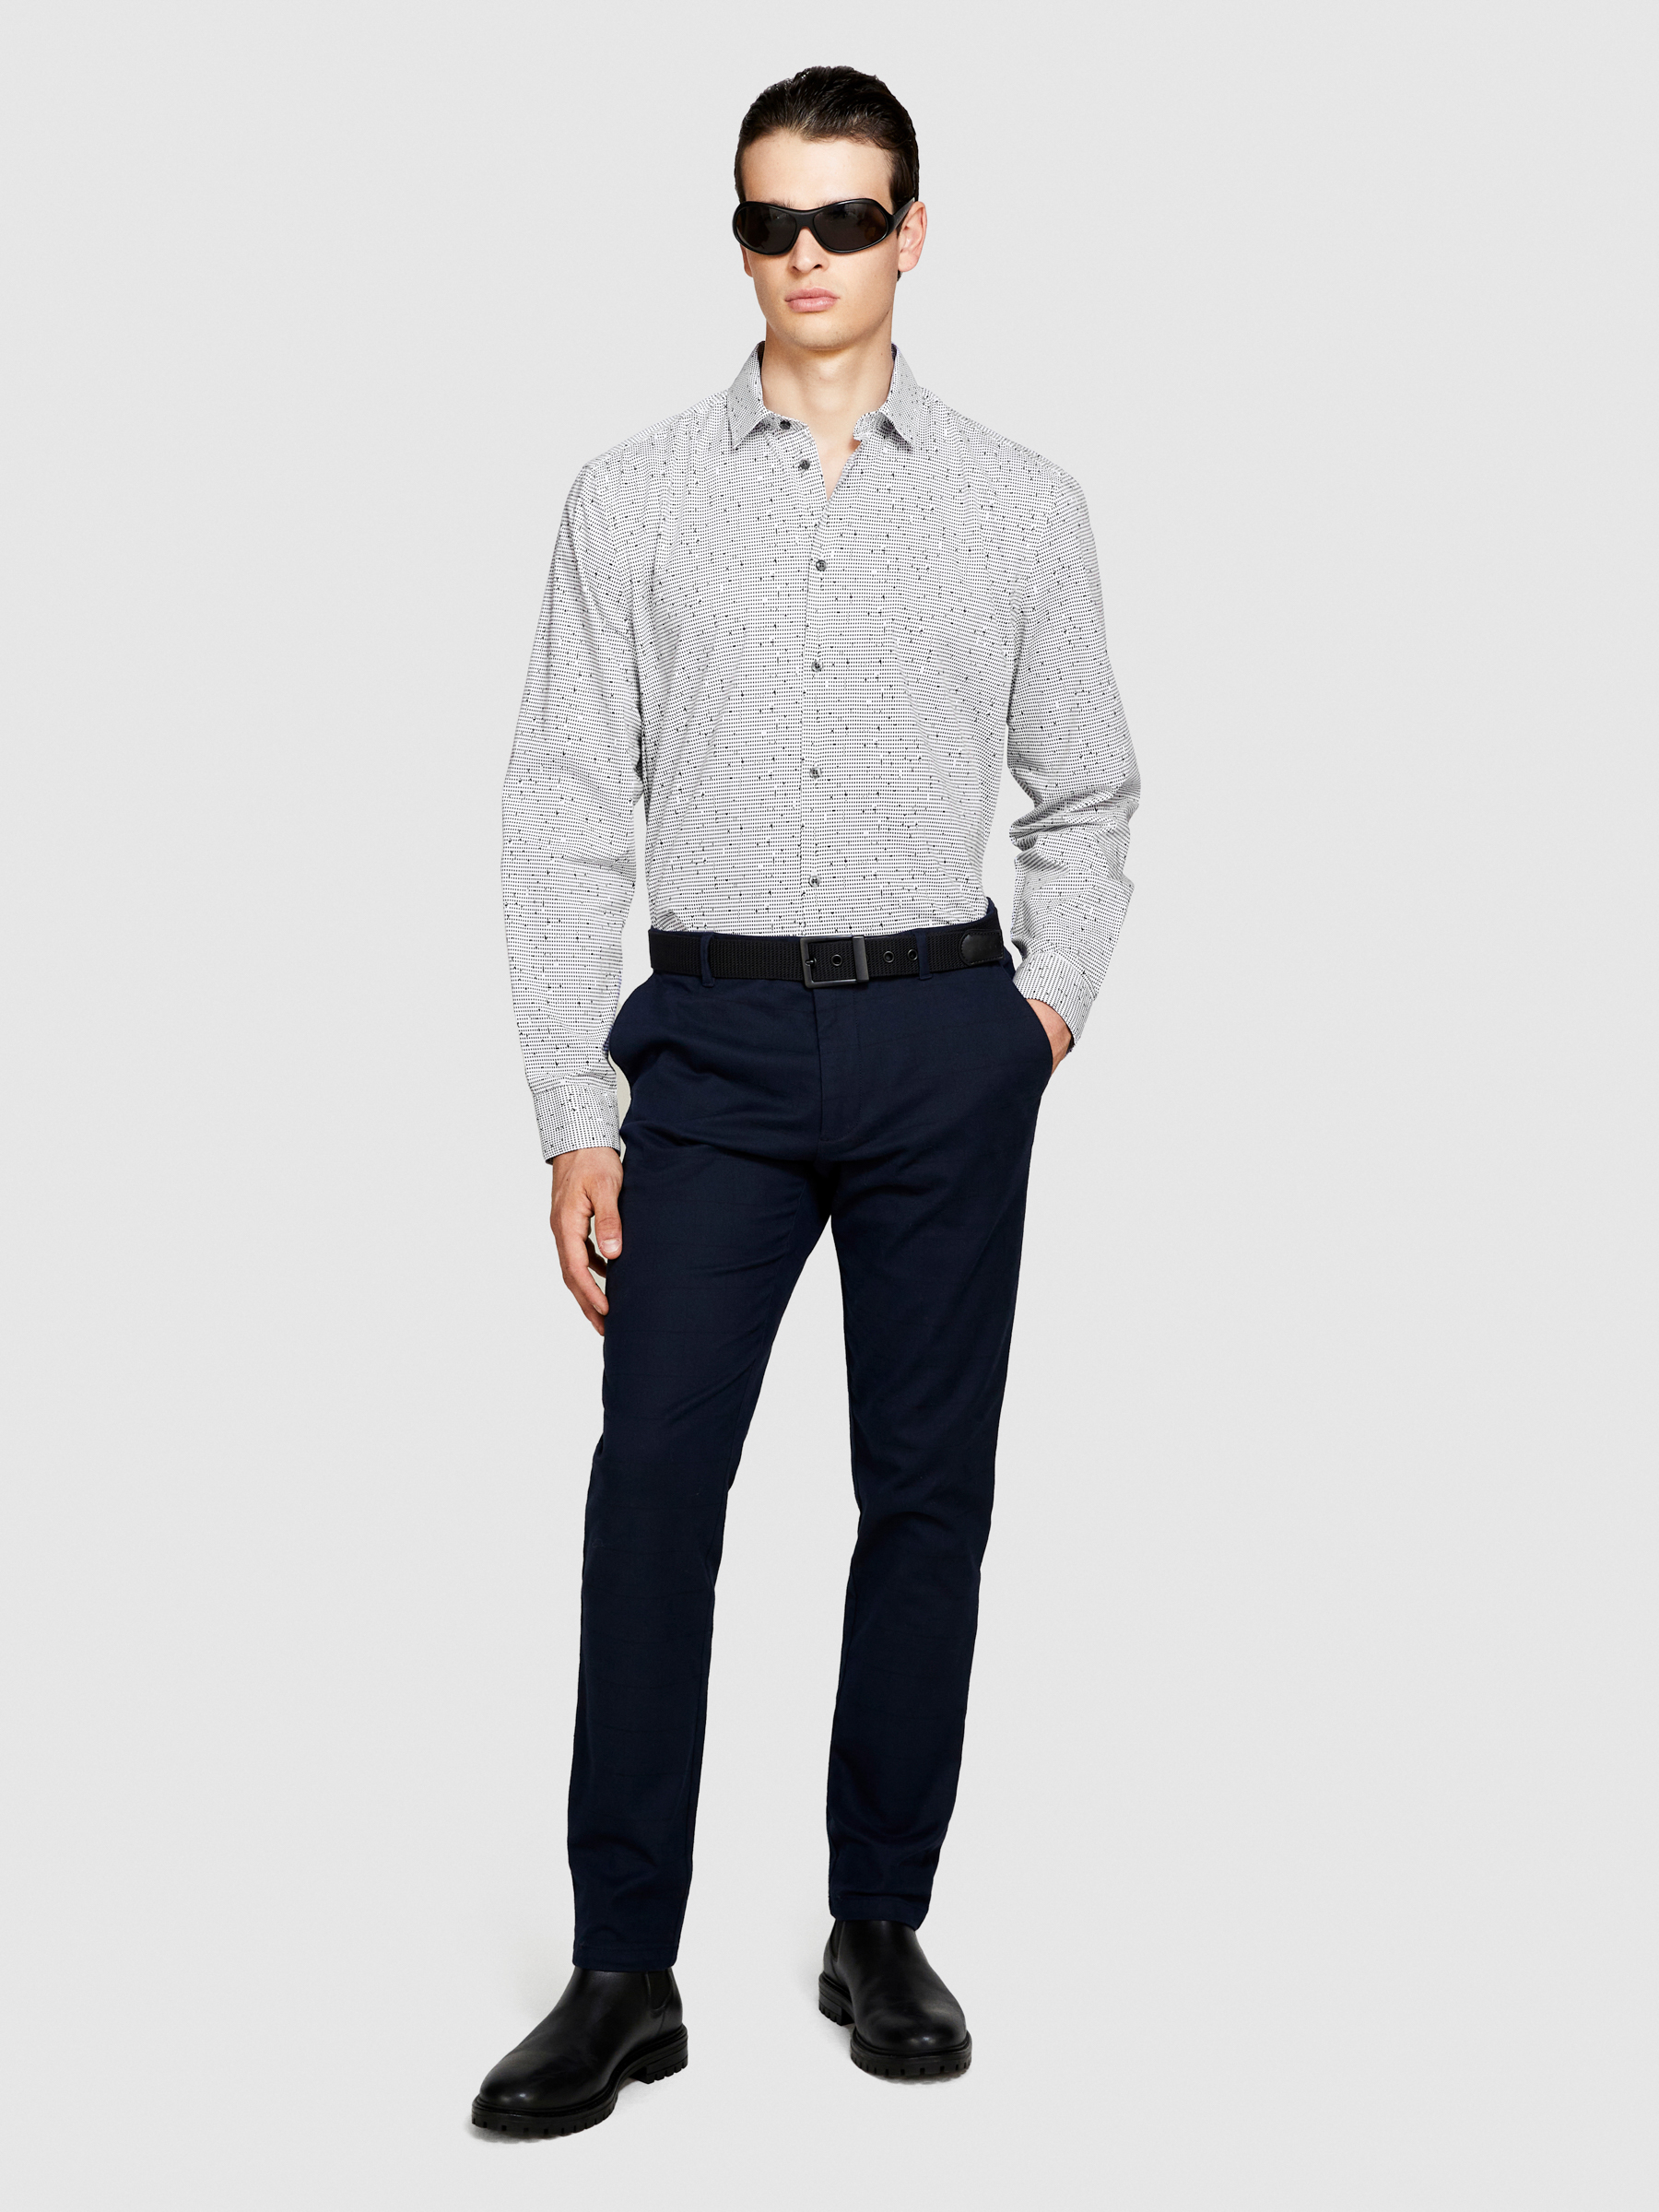 Sisley - Printed Shirt, Man, Gray, Size: L